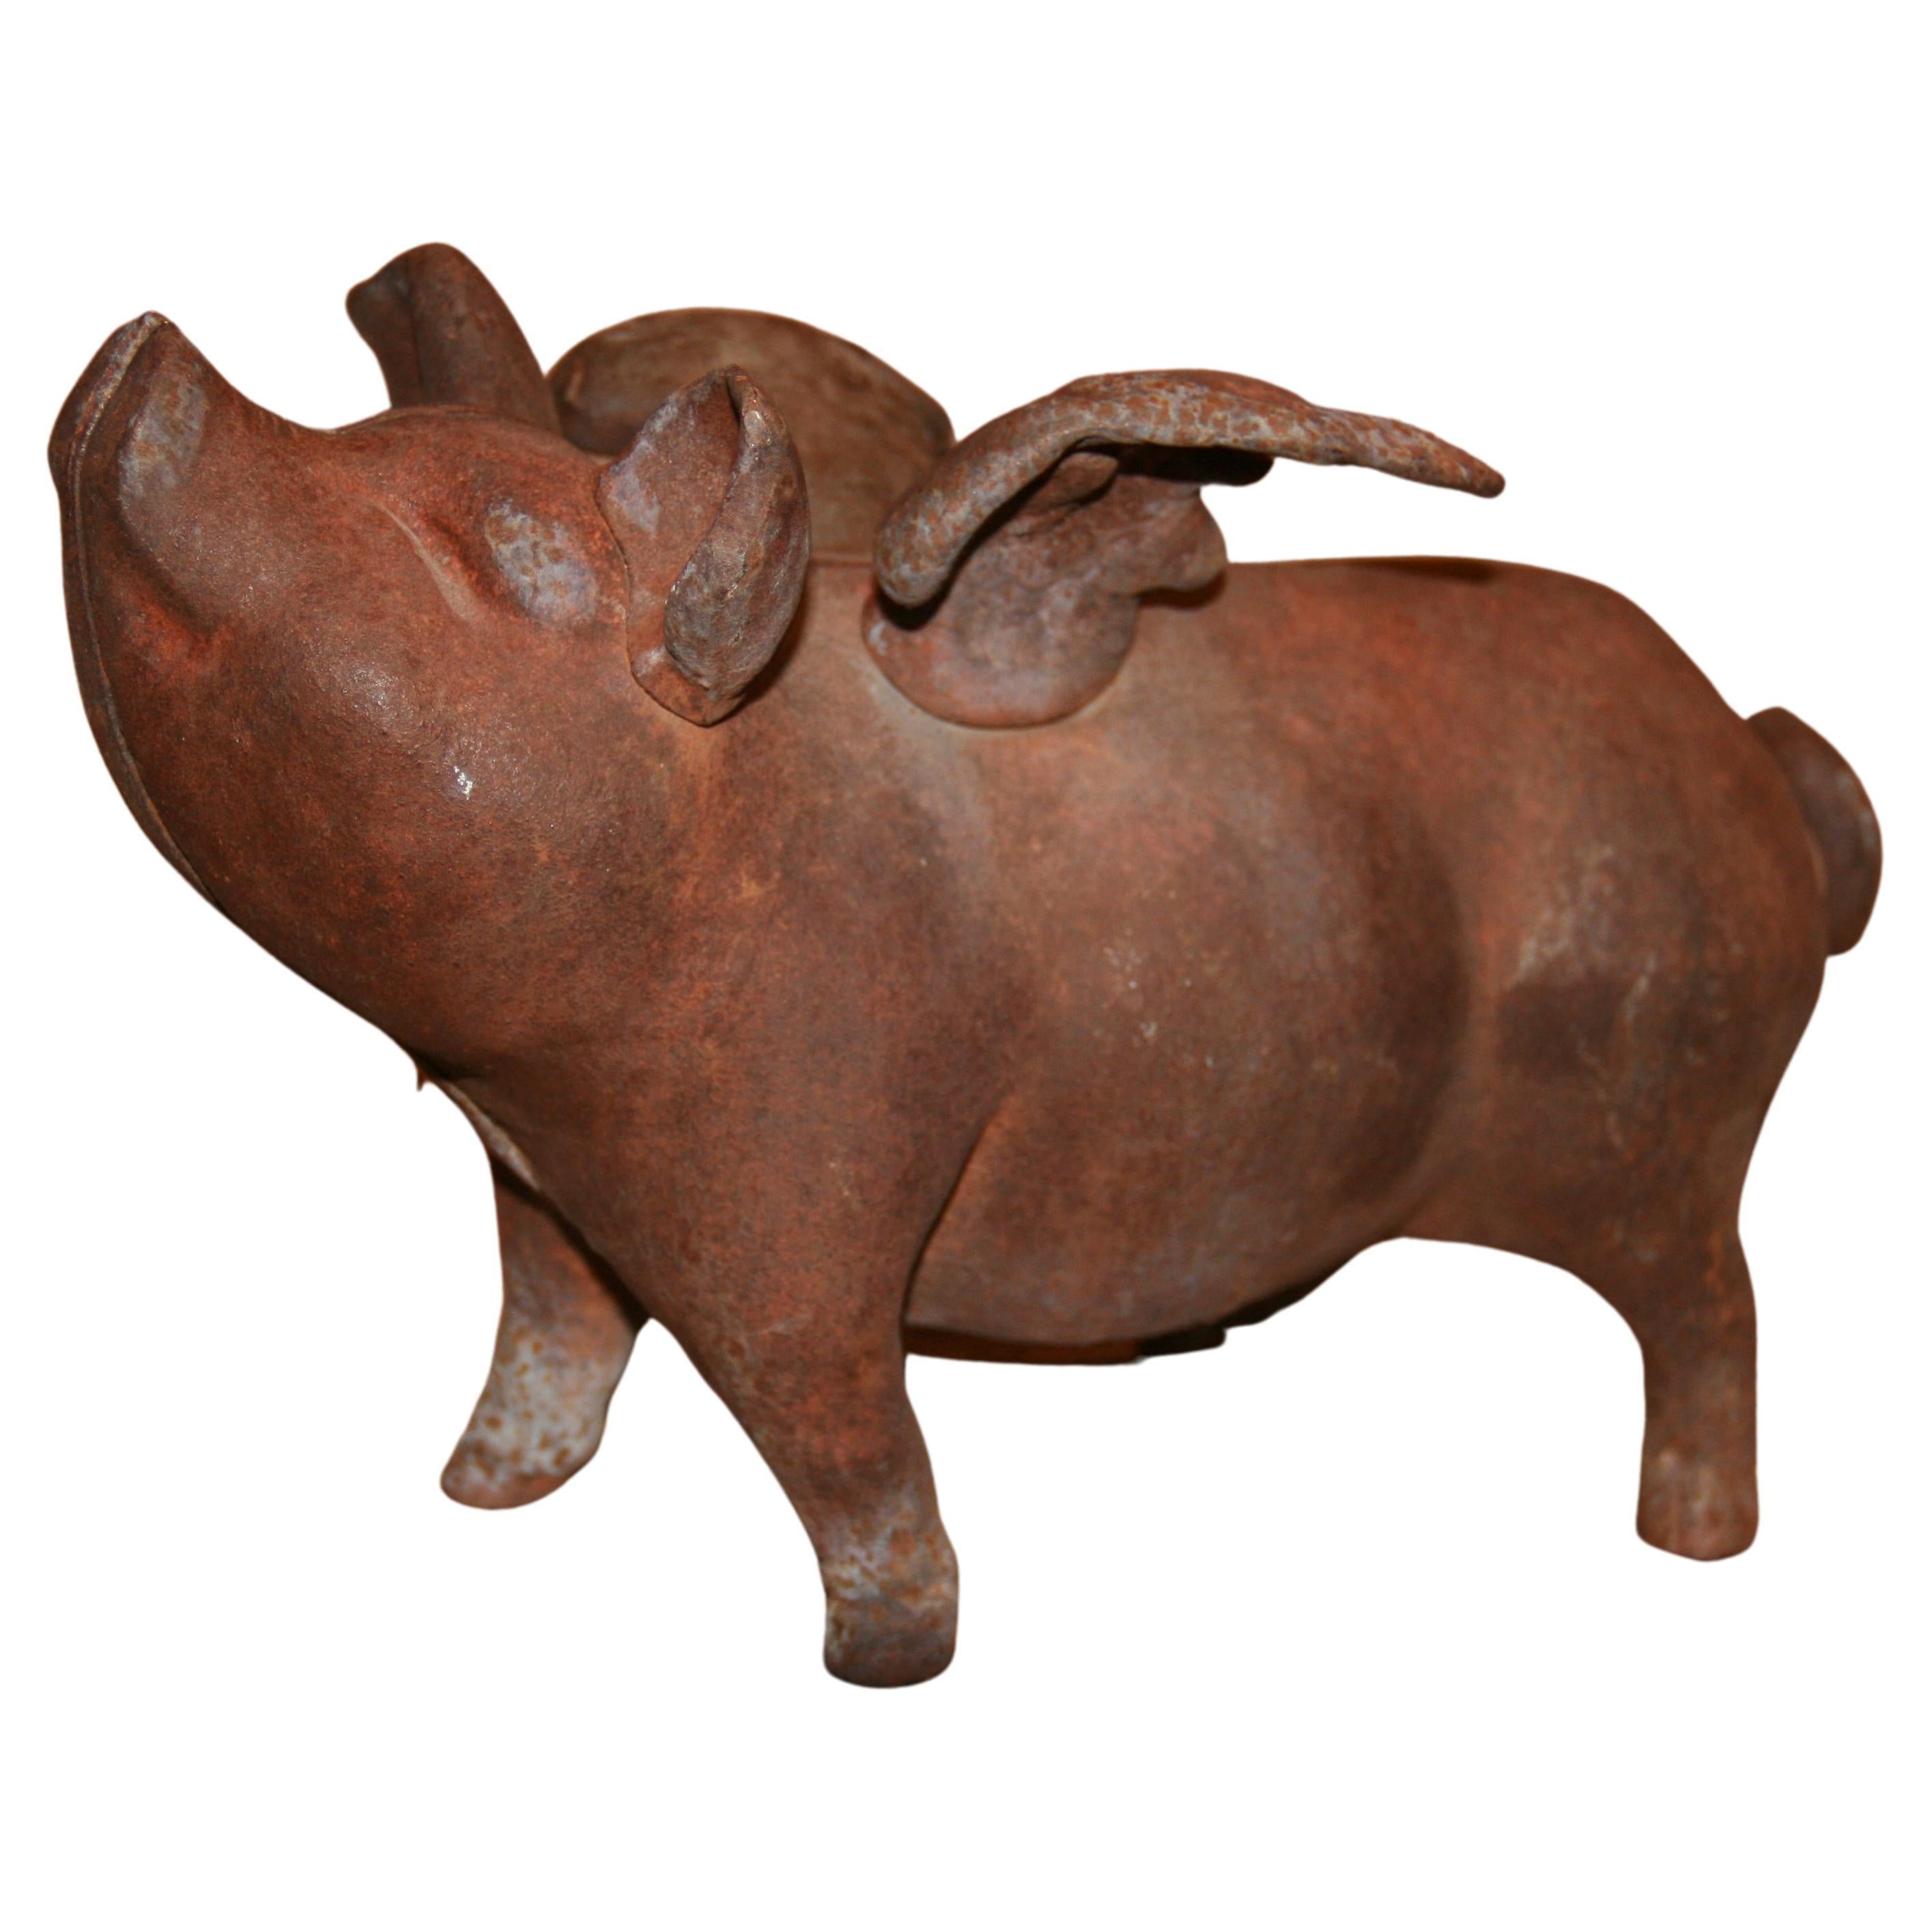 Japanese Cast Iron Pig with Wings Sculpture/Piggy Bank/Garden Ornament/Door Stop